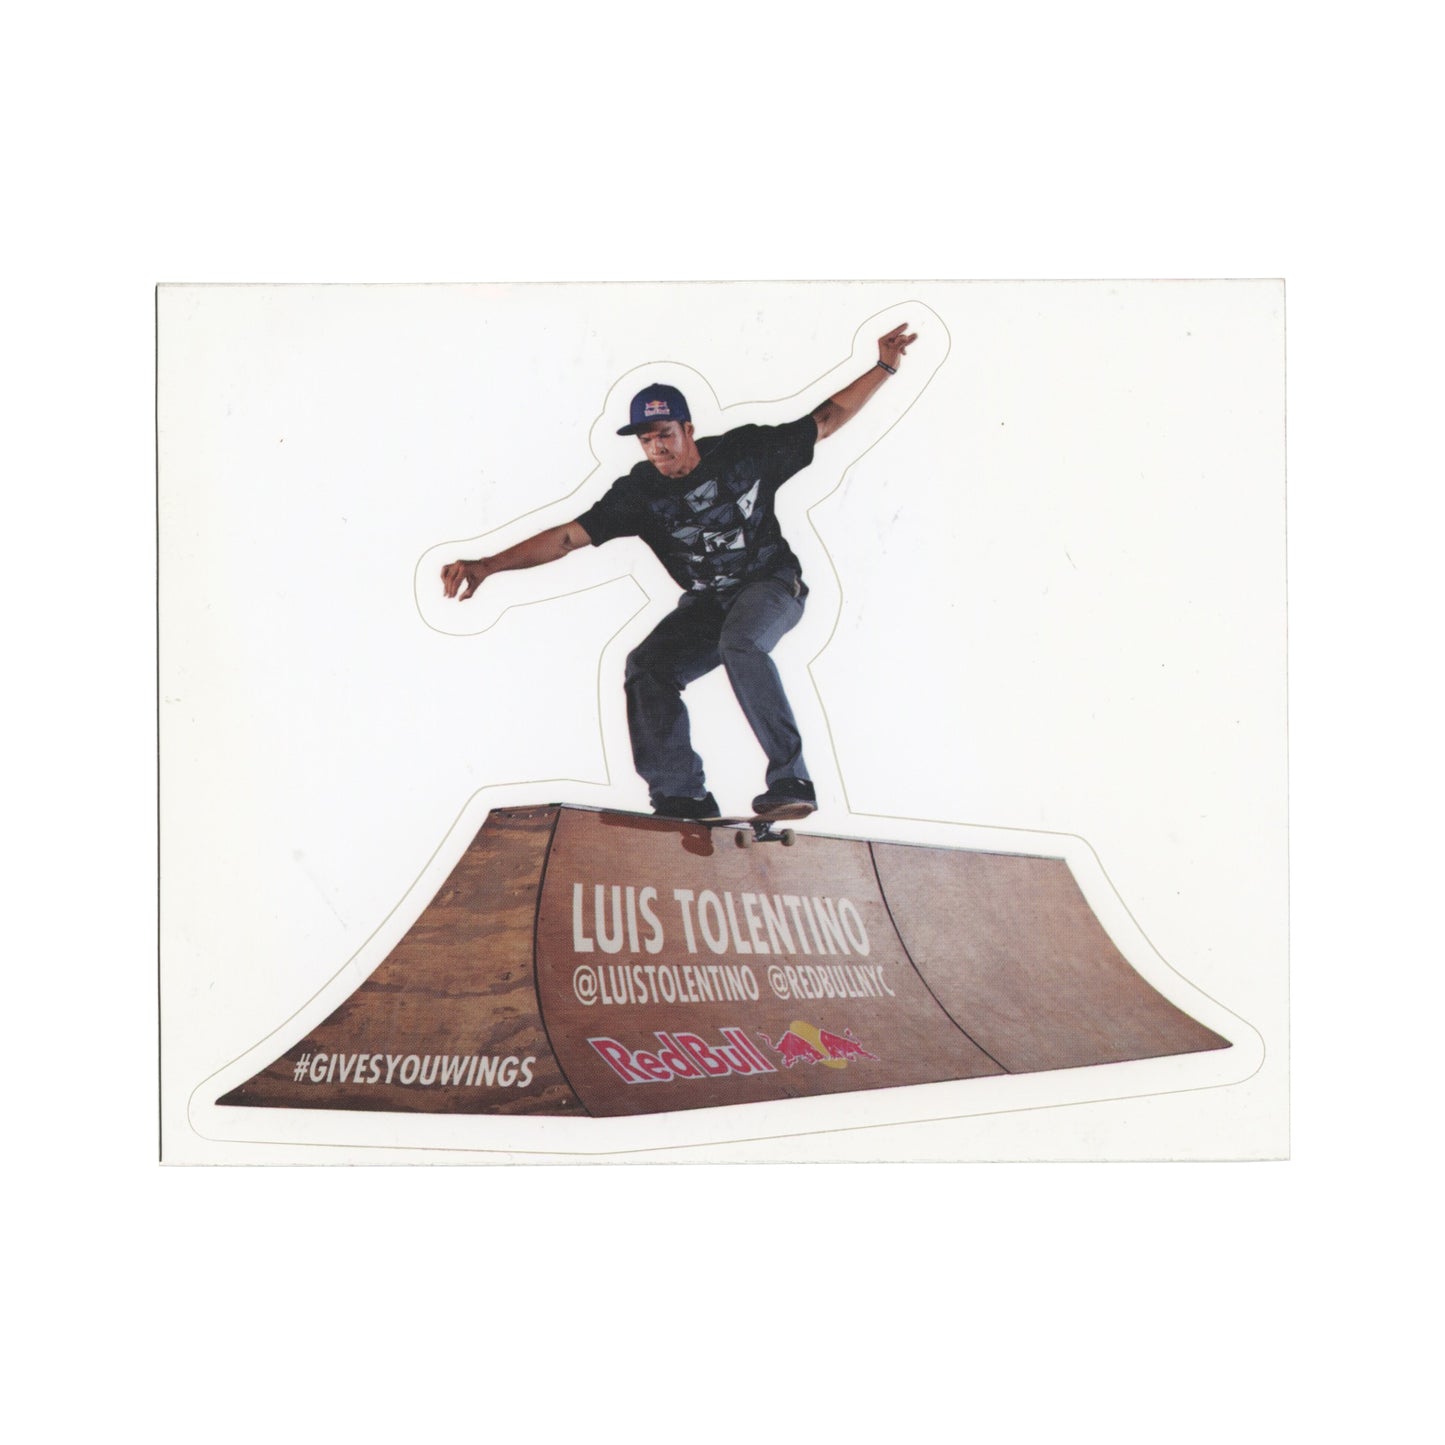 Luis Tolention RedBull Skateboarding Sticker